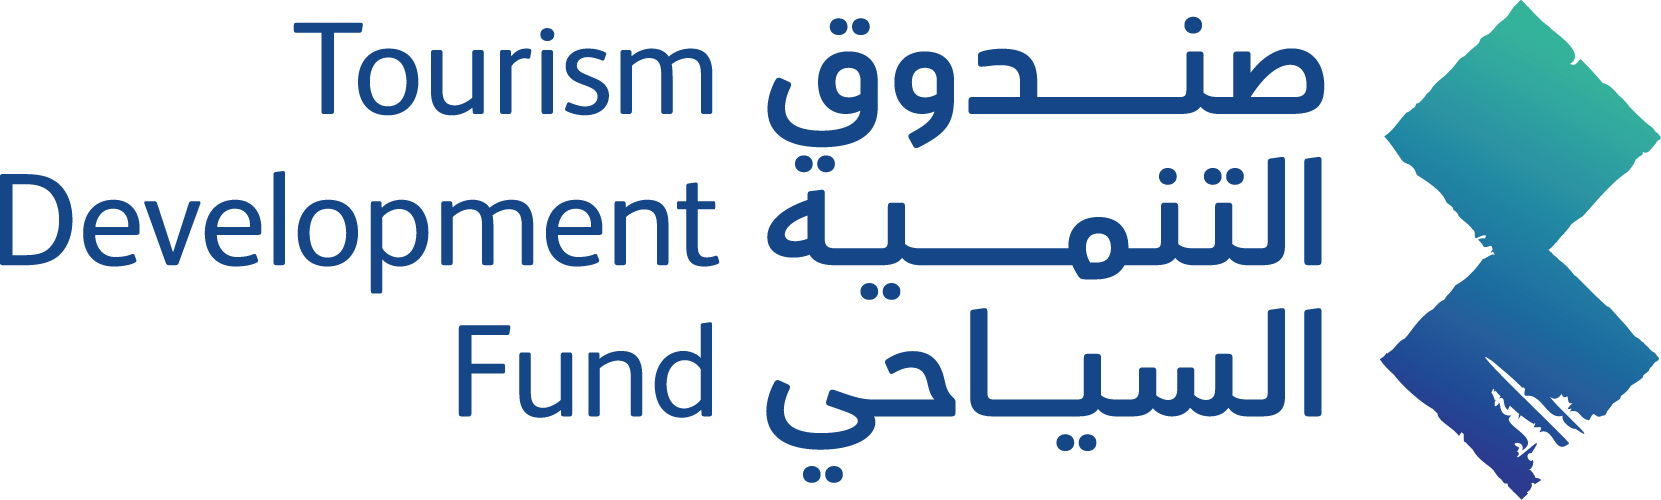 Tourism Development Fund logo